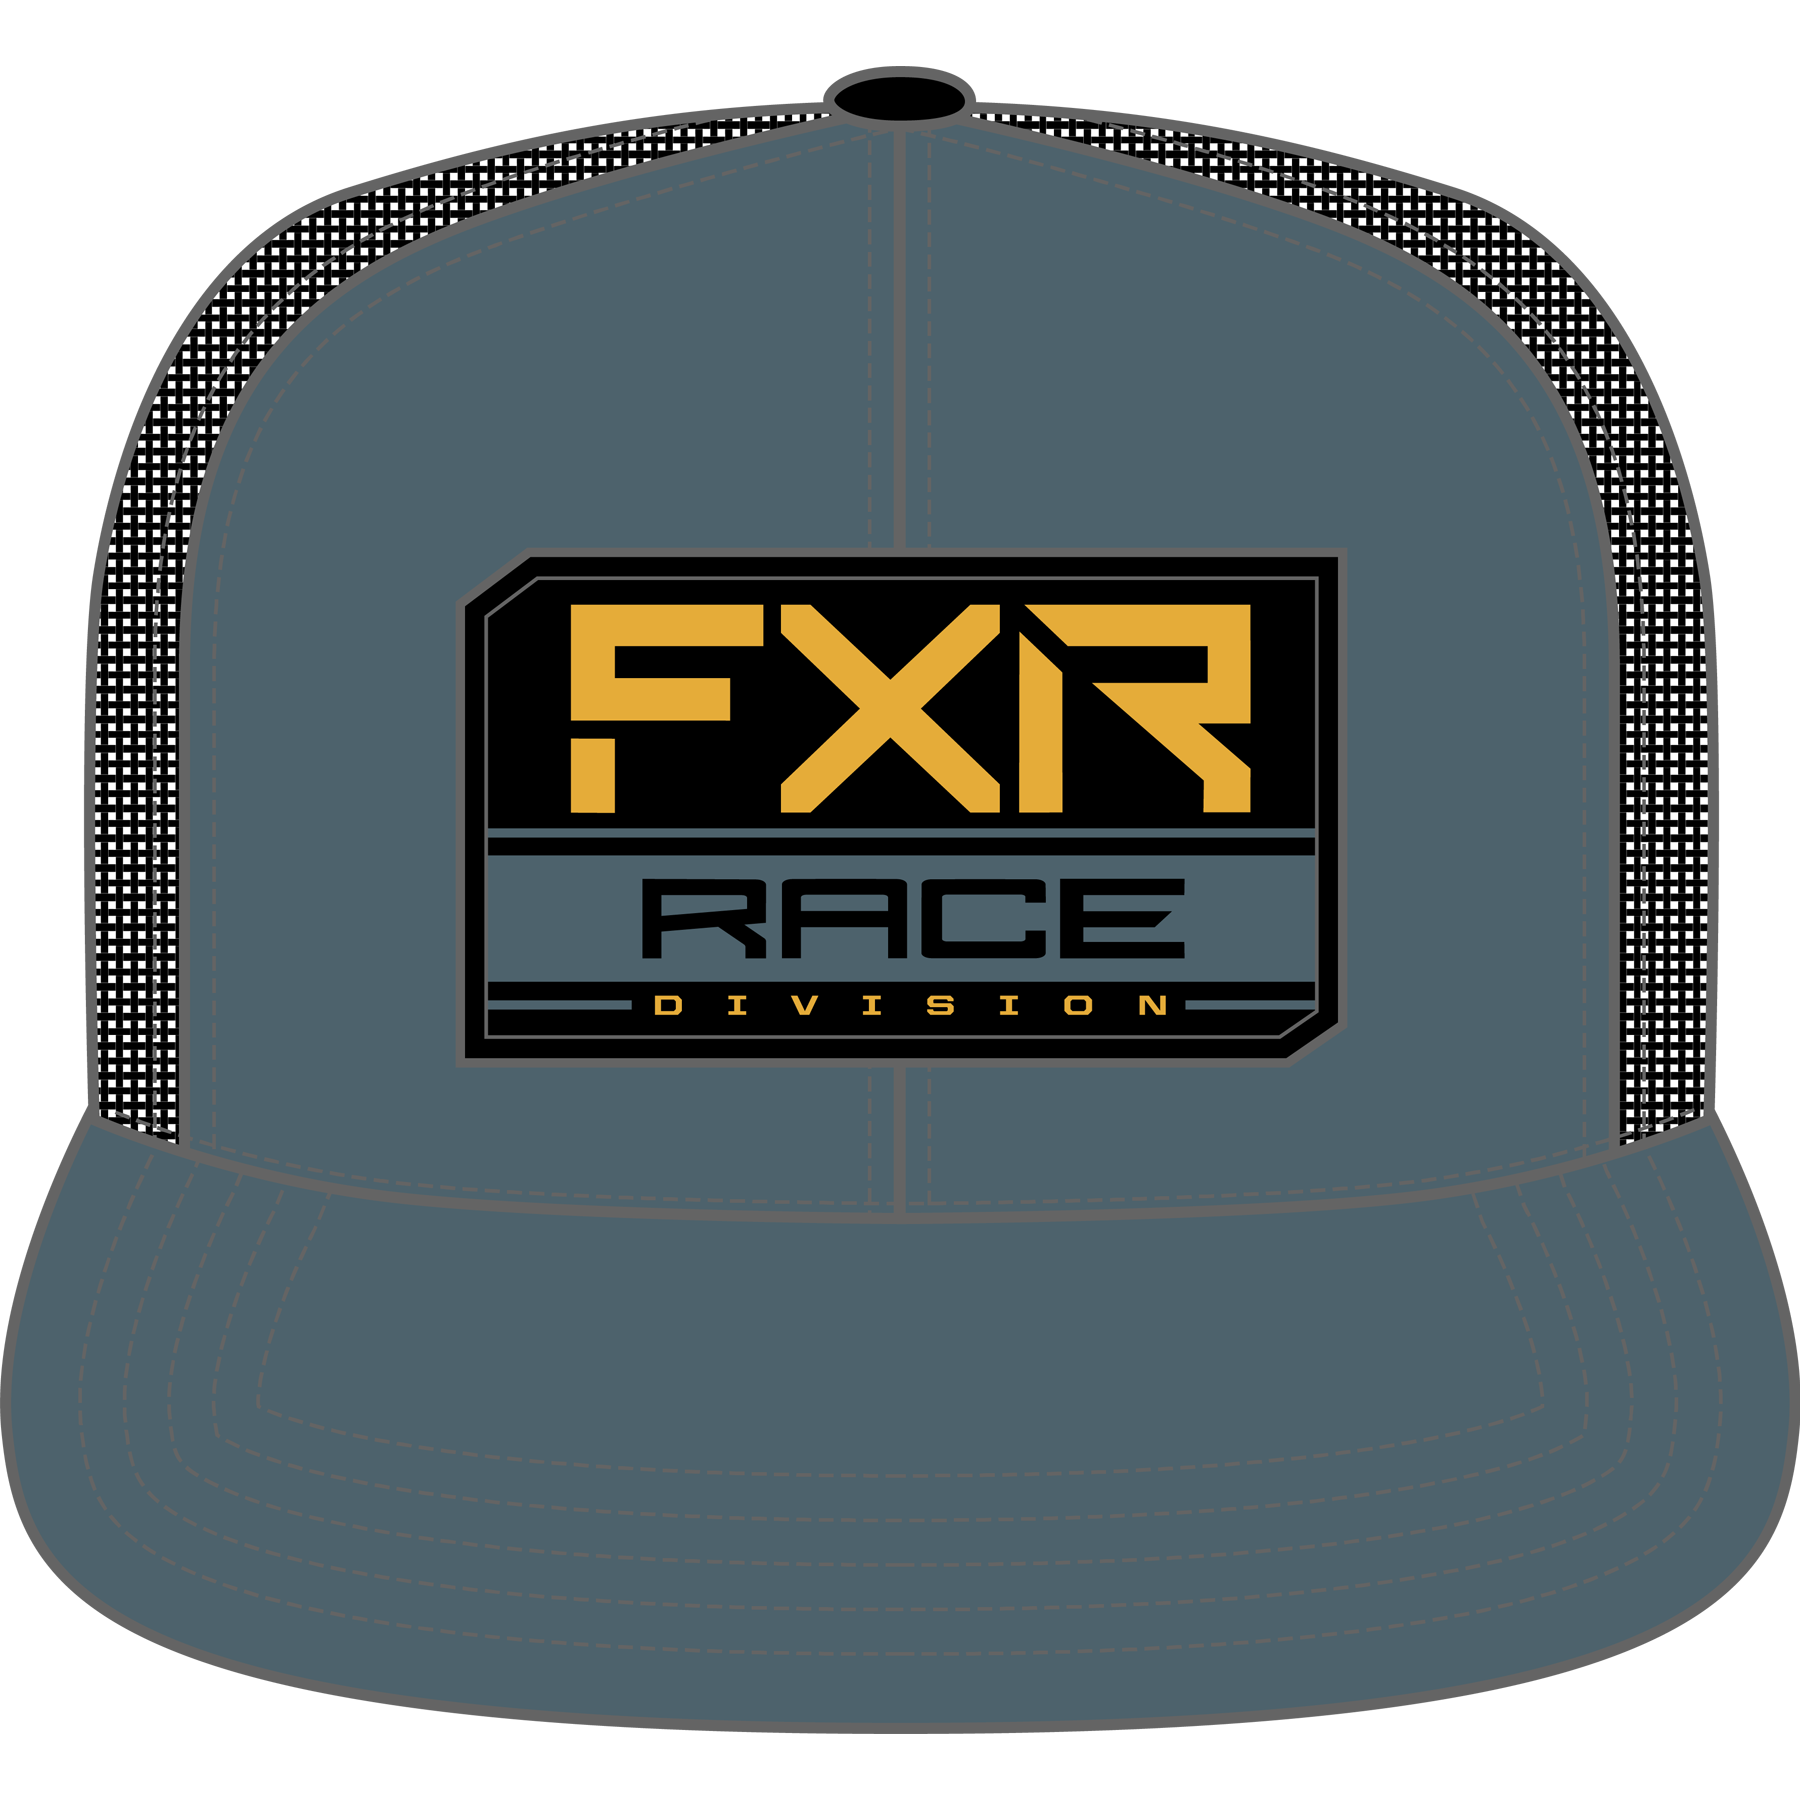 fxr racing hats adult race div snapback - casual